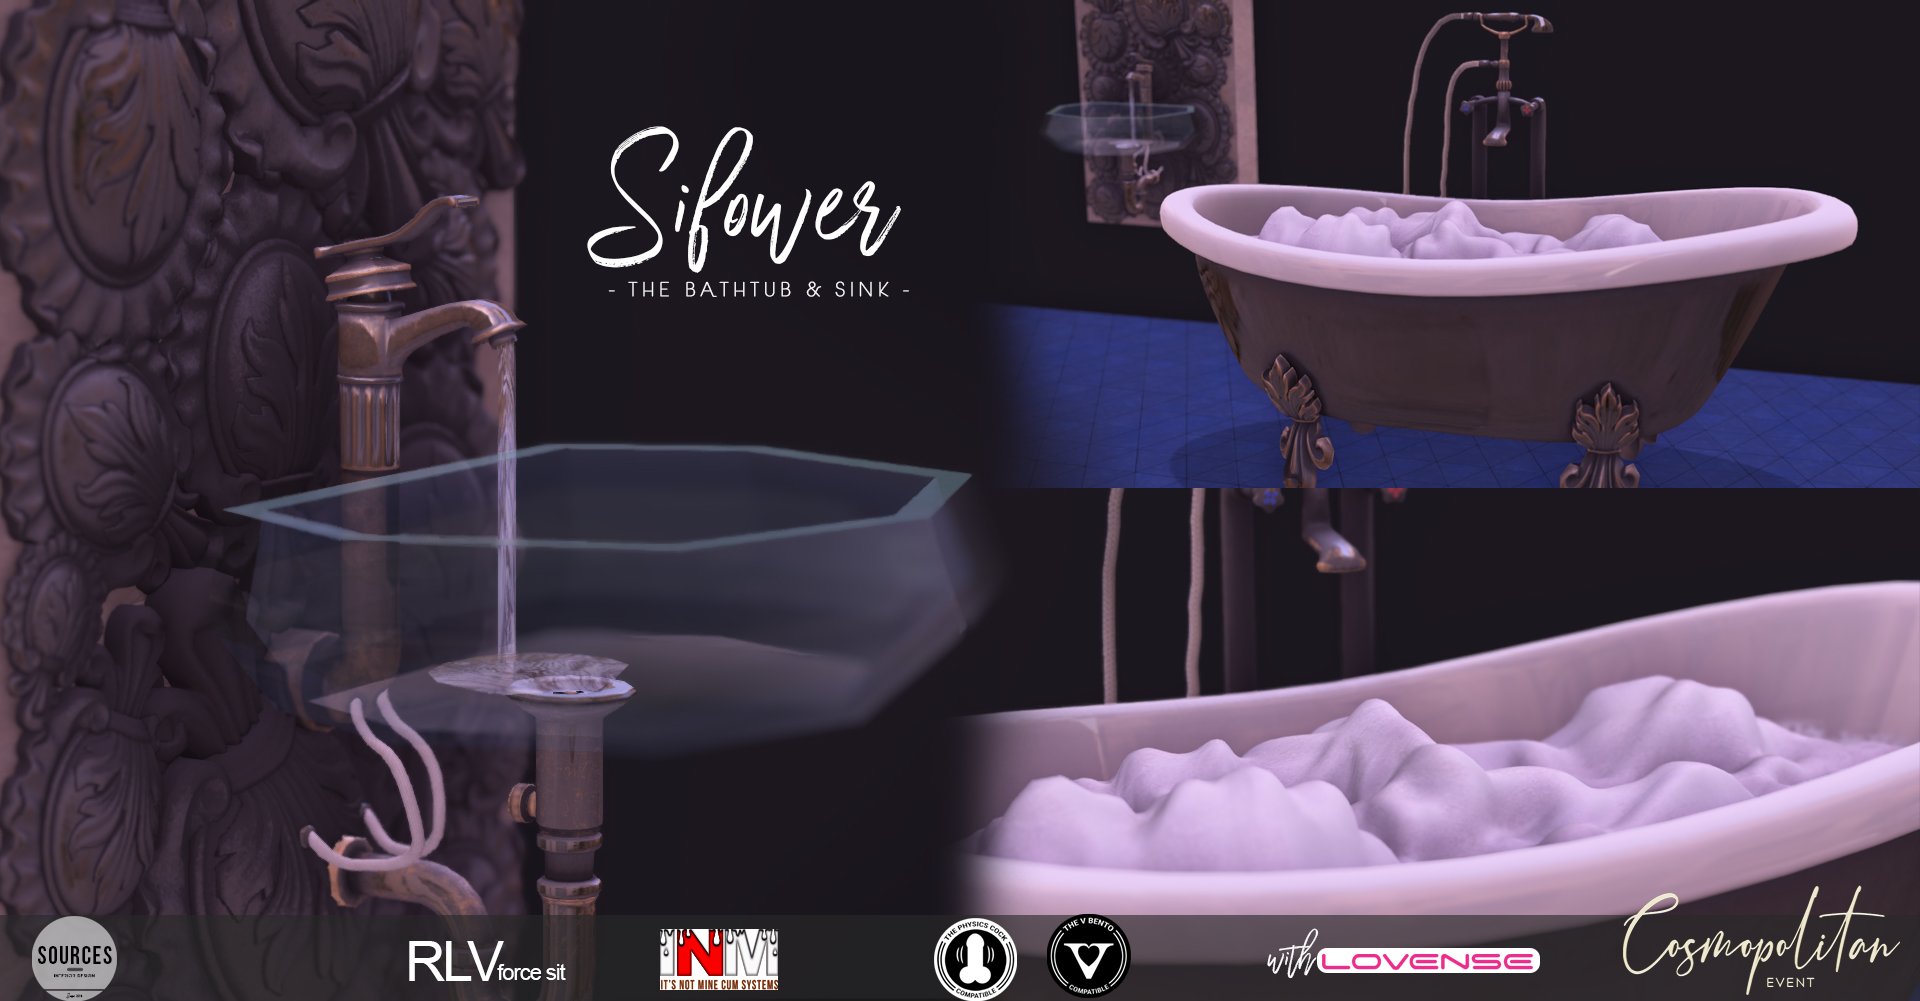 SOURCES – Sifower Bathtub and Sink